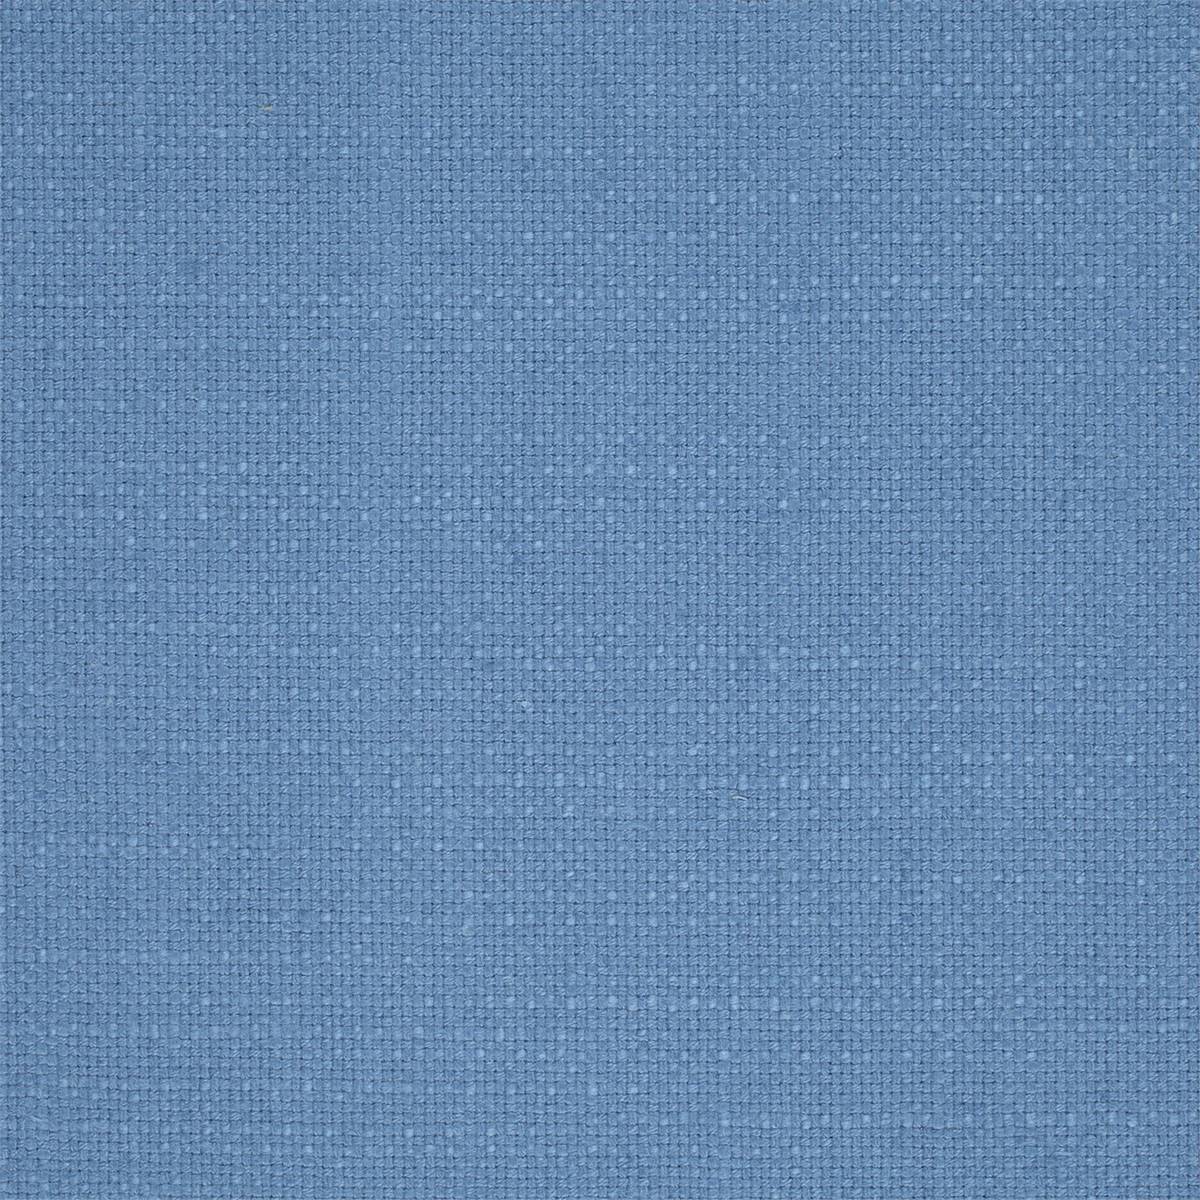 Tuscany Cornflower Blue Fabric by Sanderson